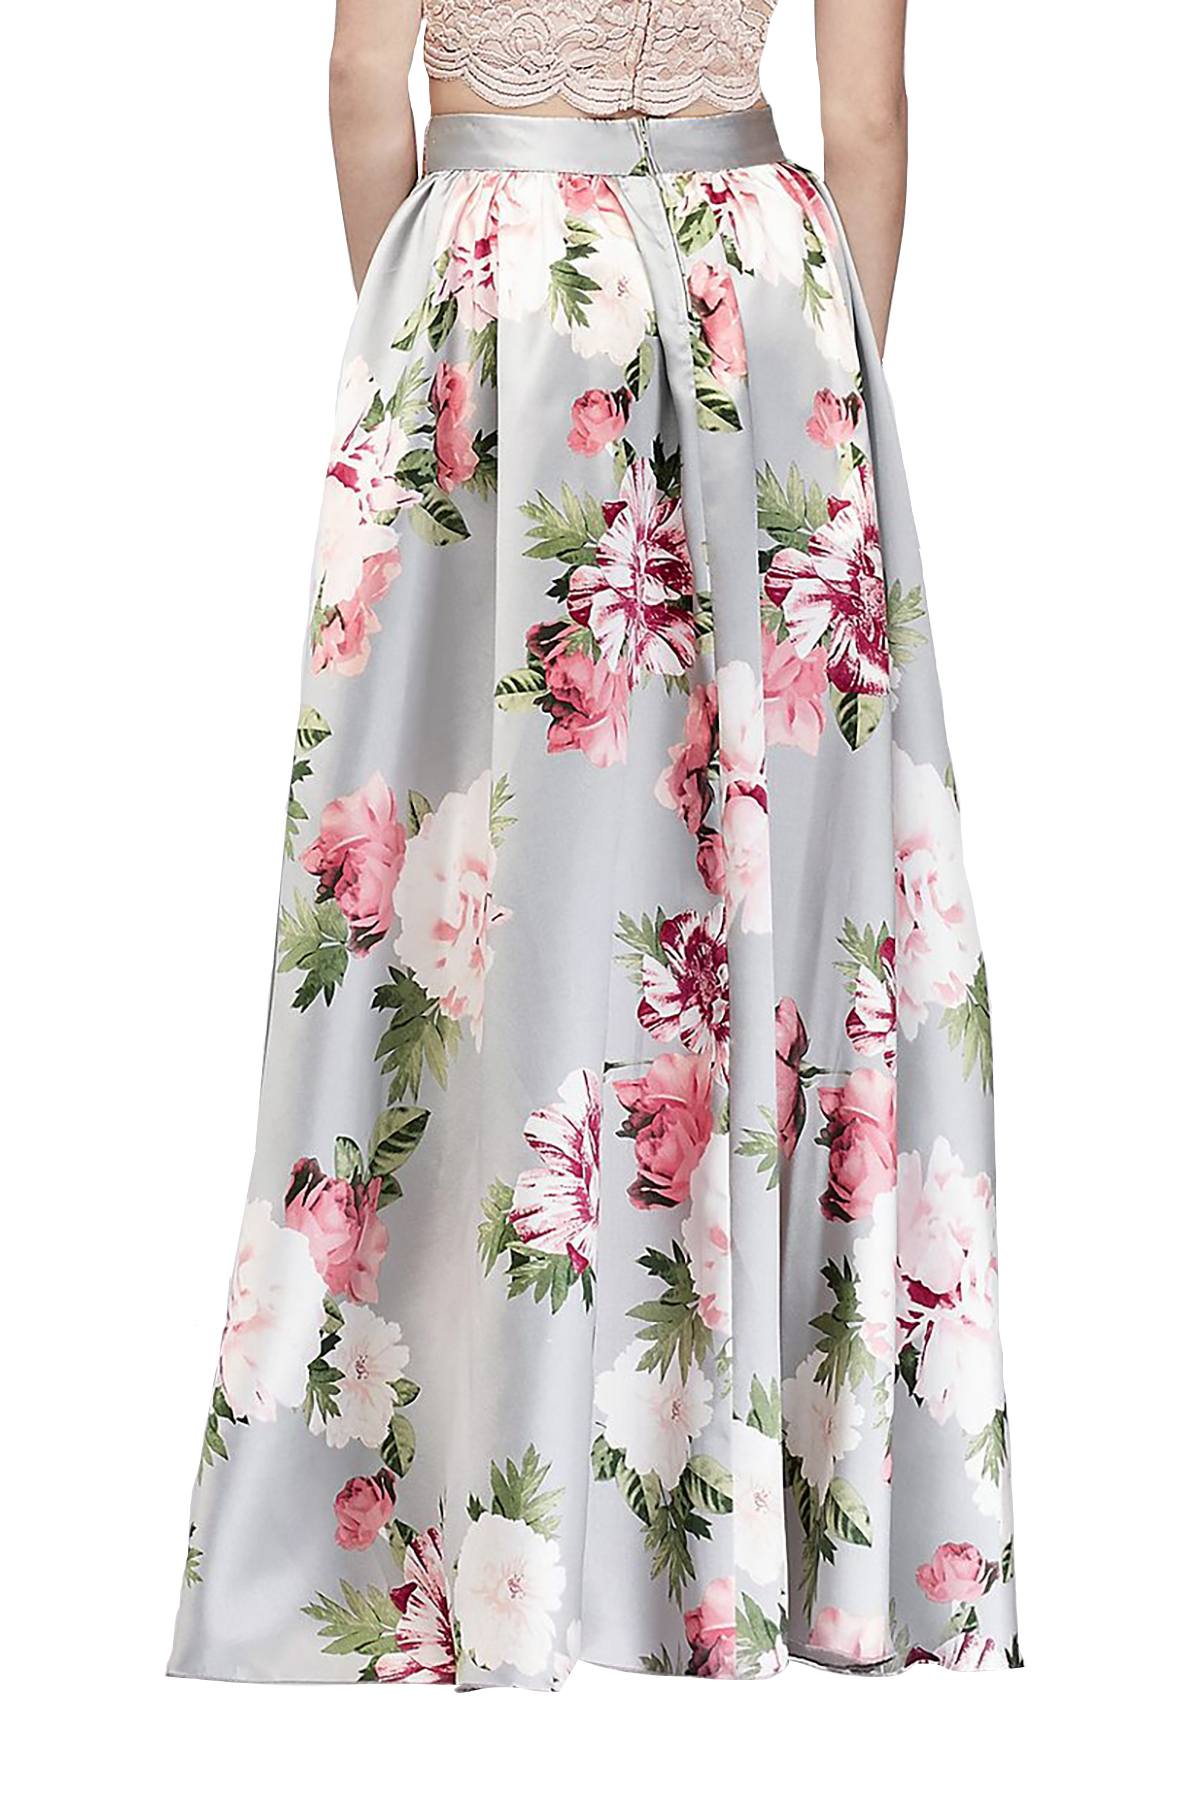 Speechless Grey/Blush Floral-Print Formal Mikado Skirt